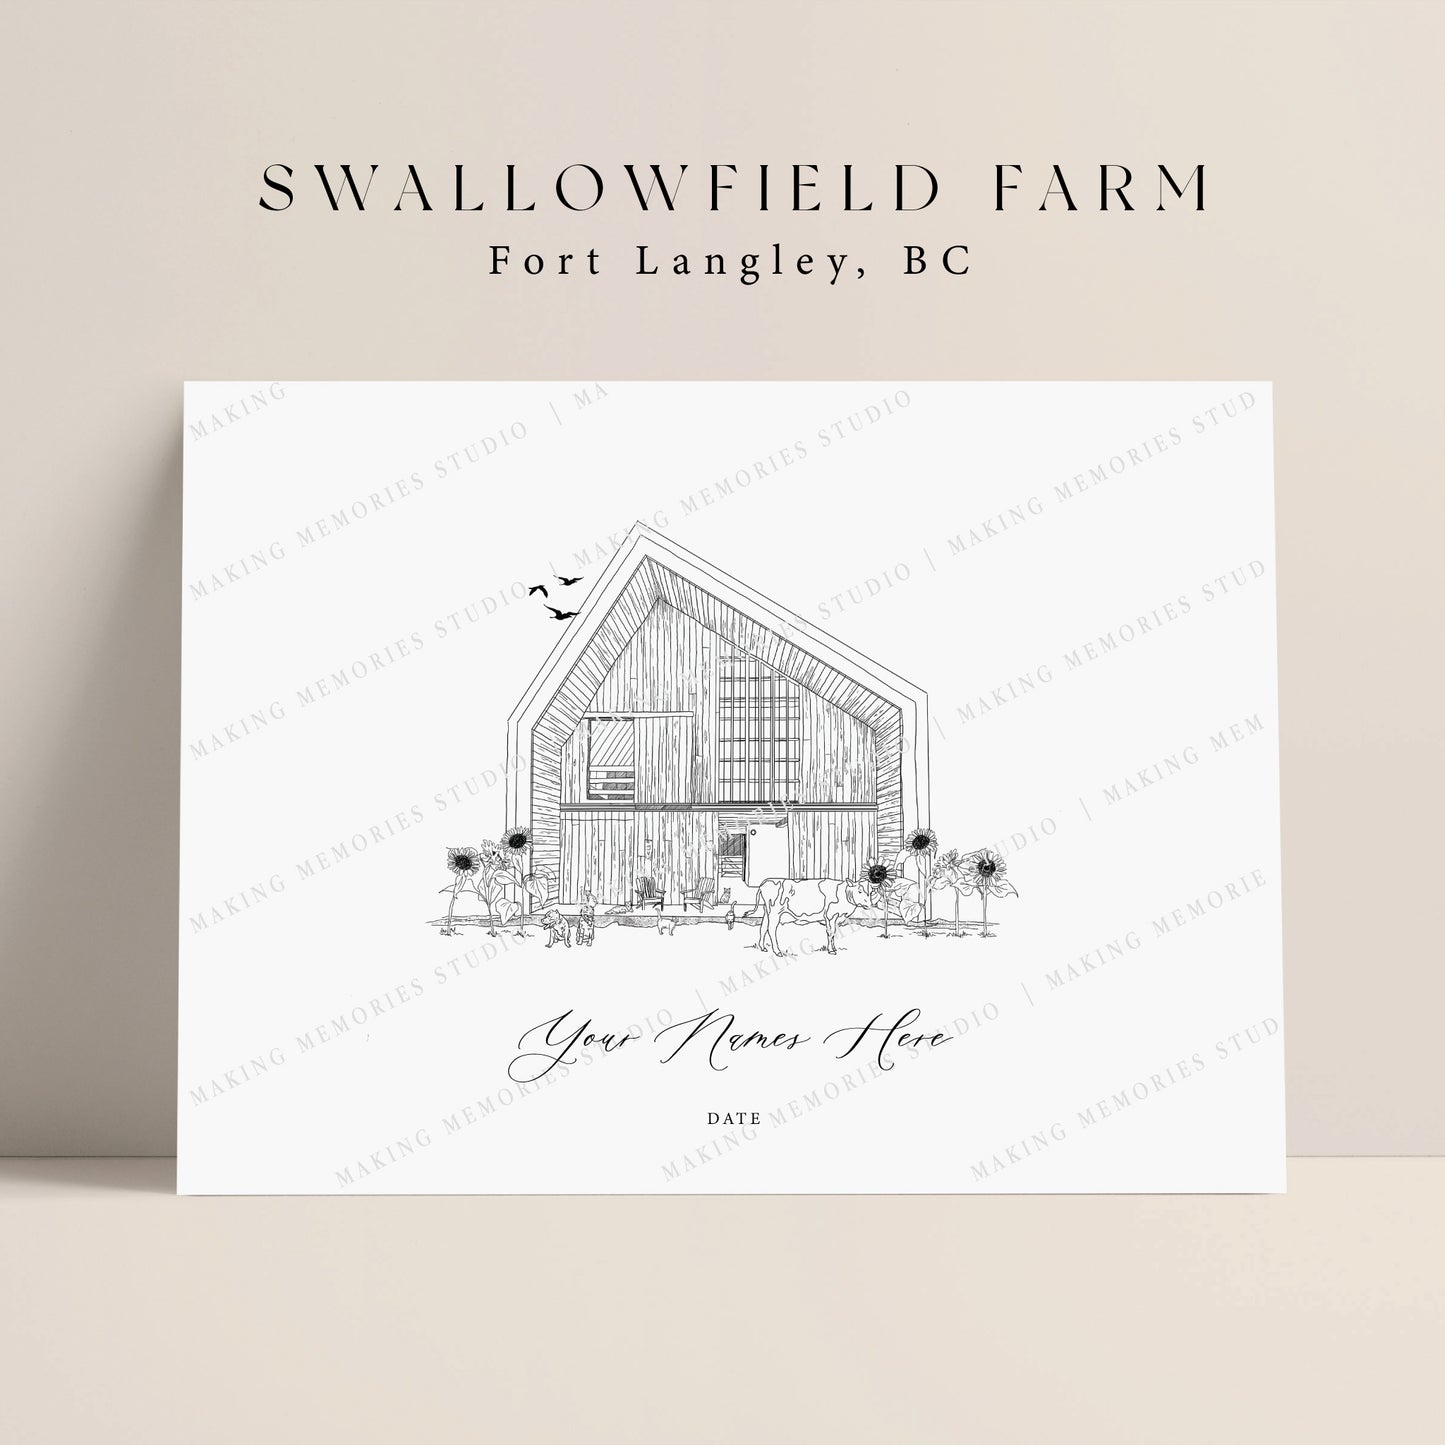 Swallowfield Farm